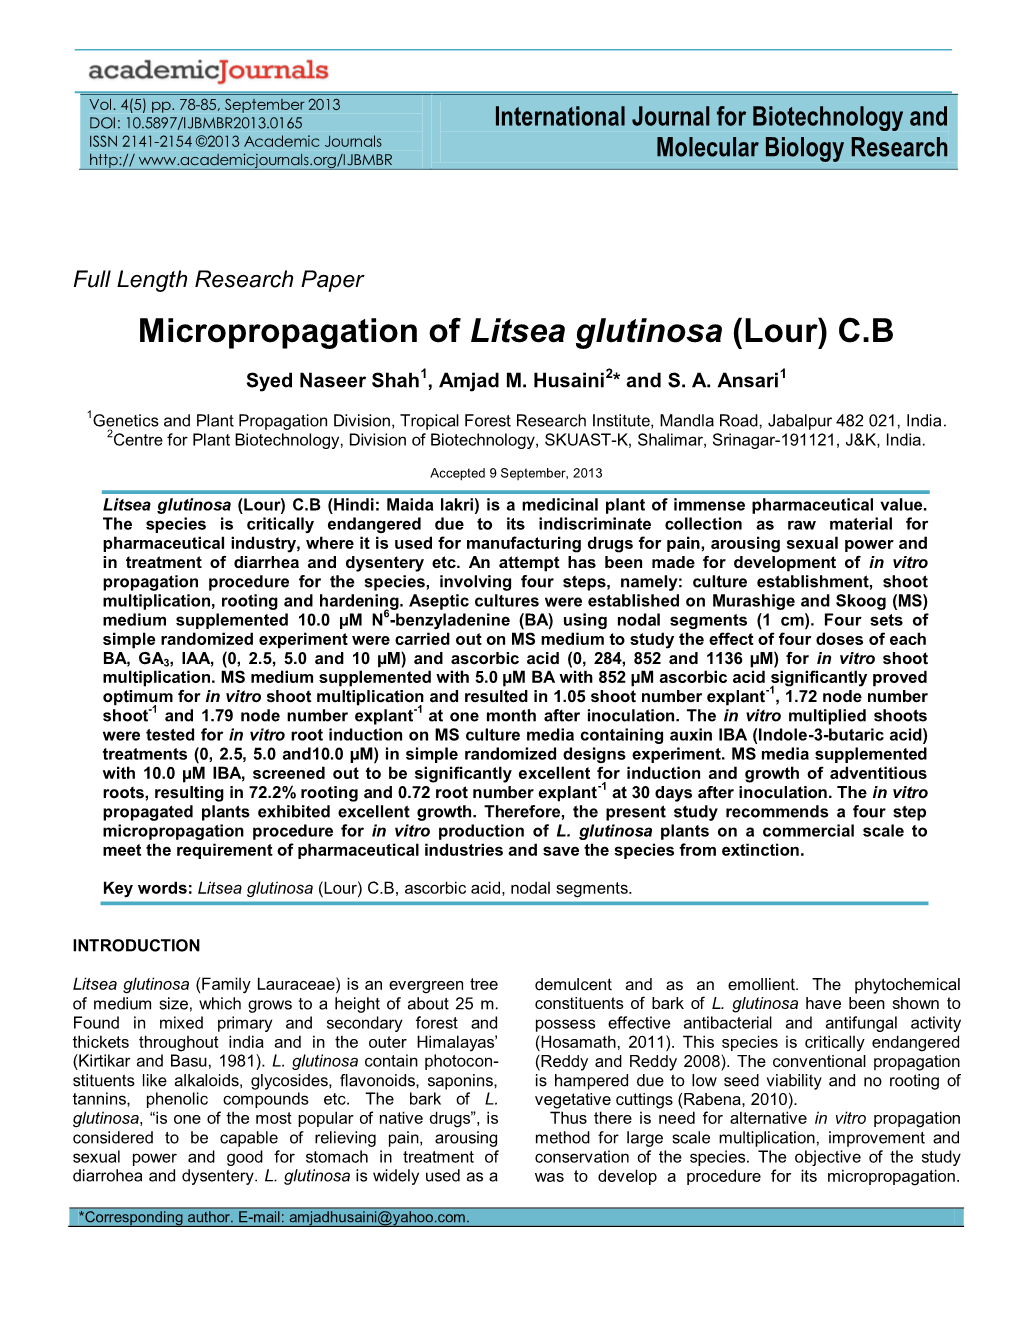 Micropropagation of Litsea Glutinosa (Lour) C.B